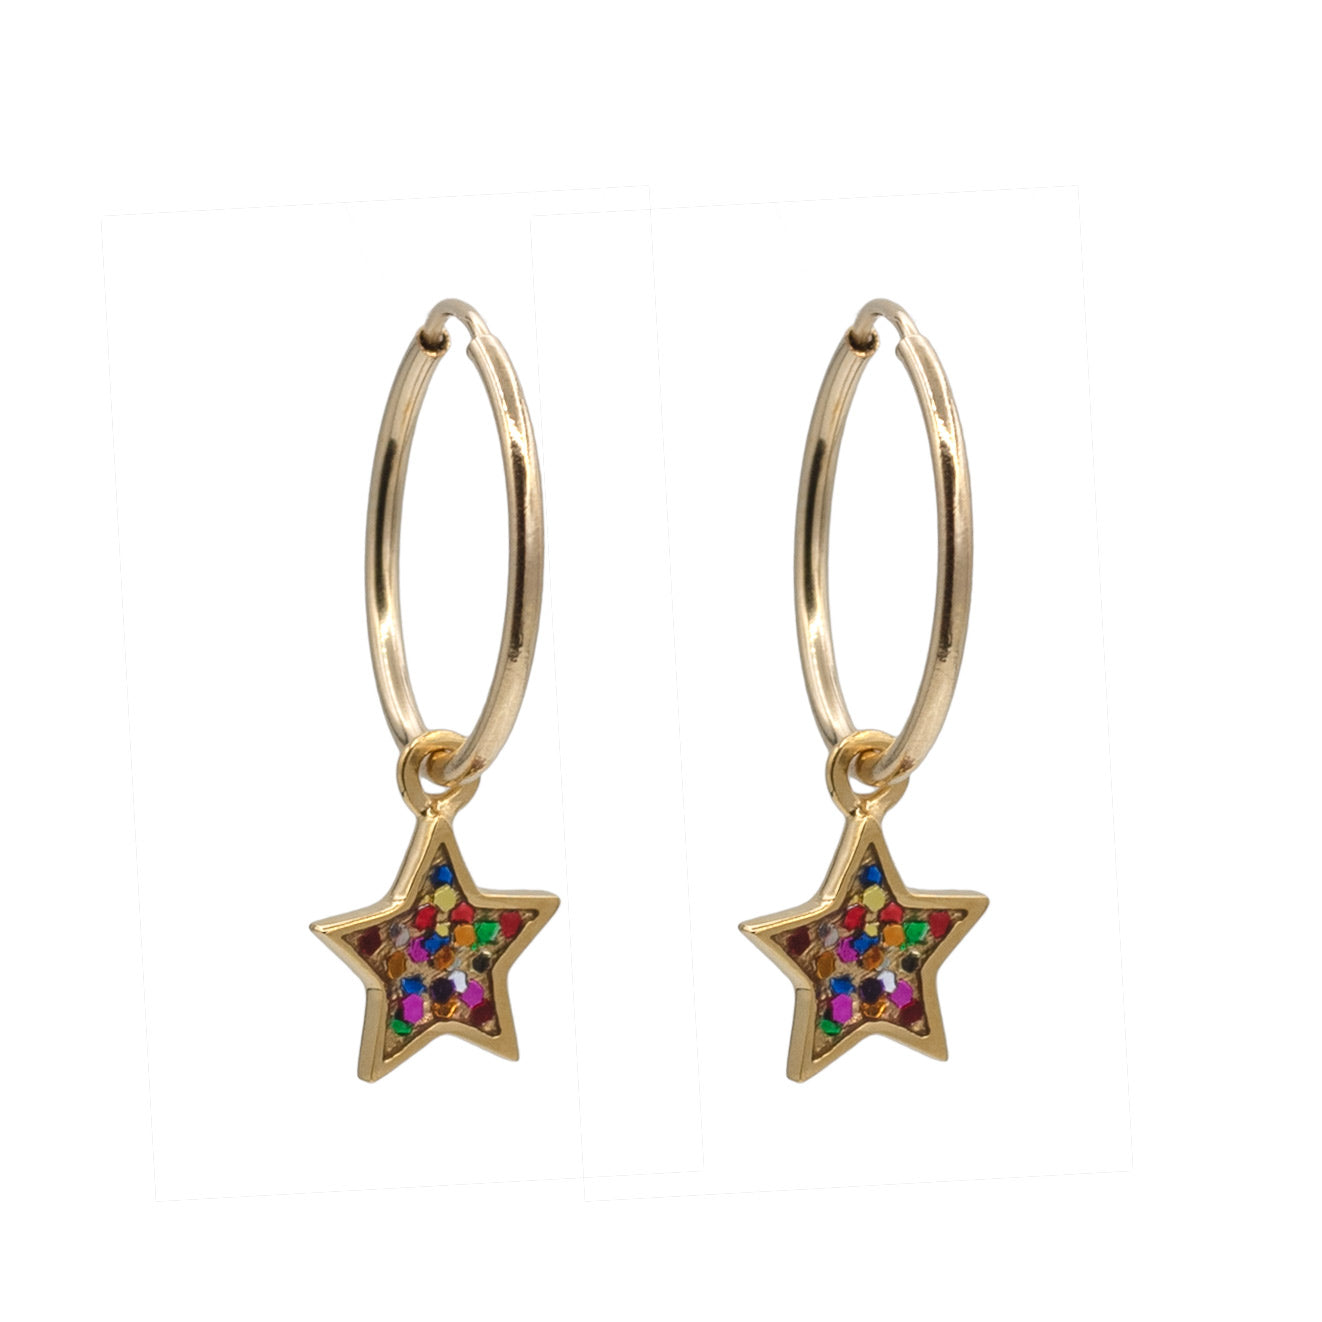 star hoop earrings in gold filled with multiglitter